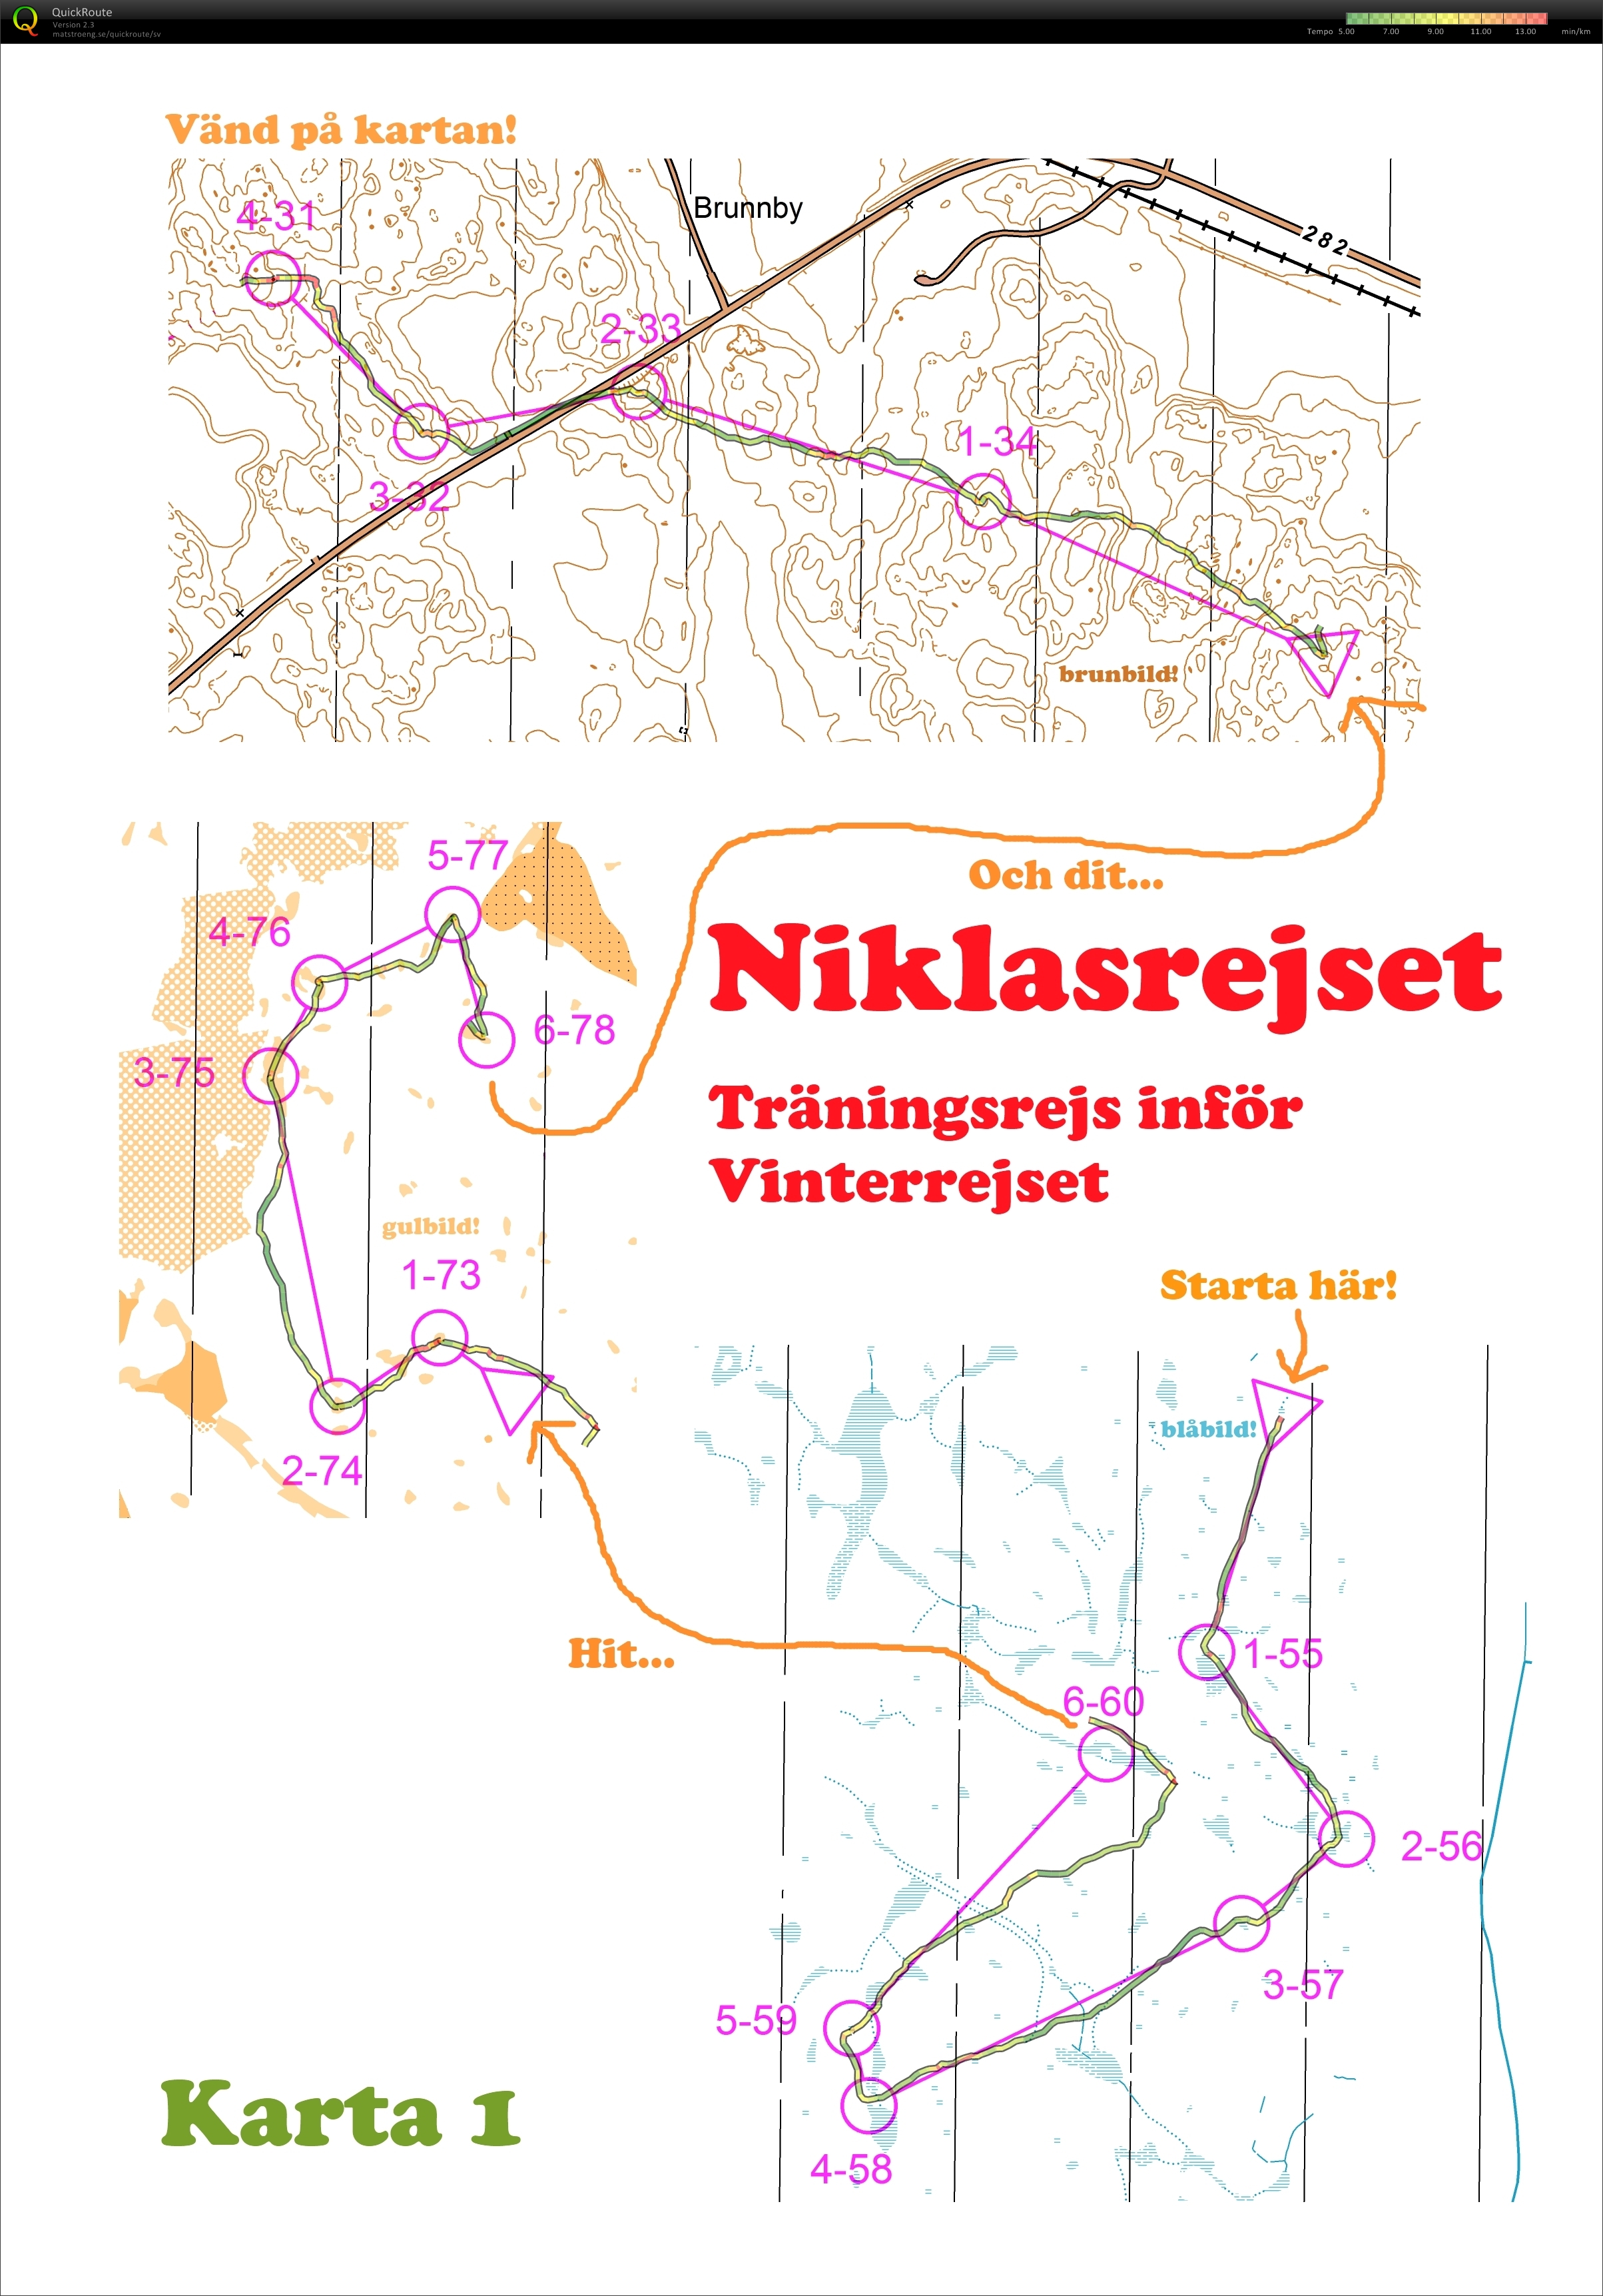 Niklasrejset - karta 1 (05/08/2011)